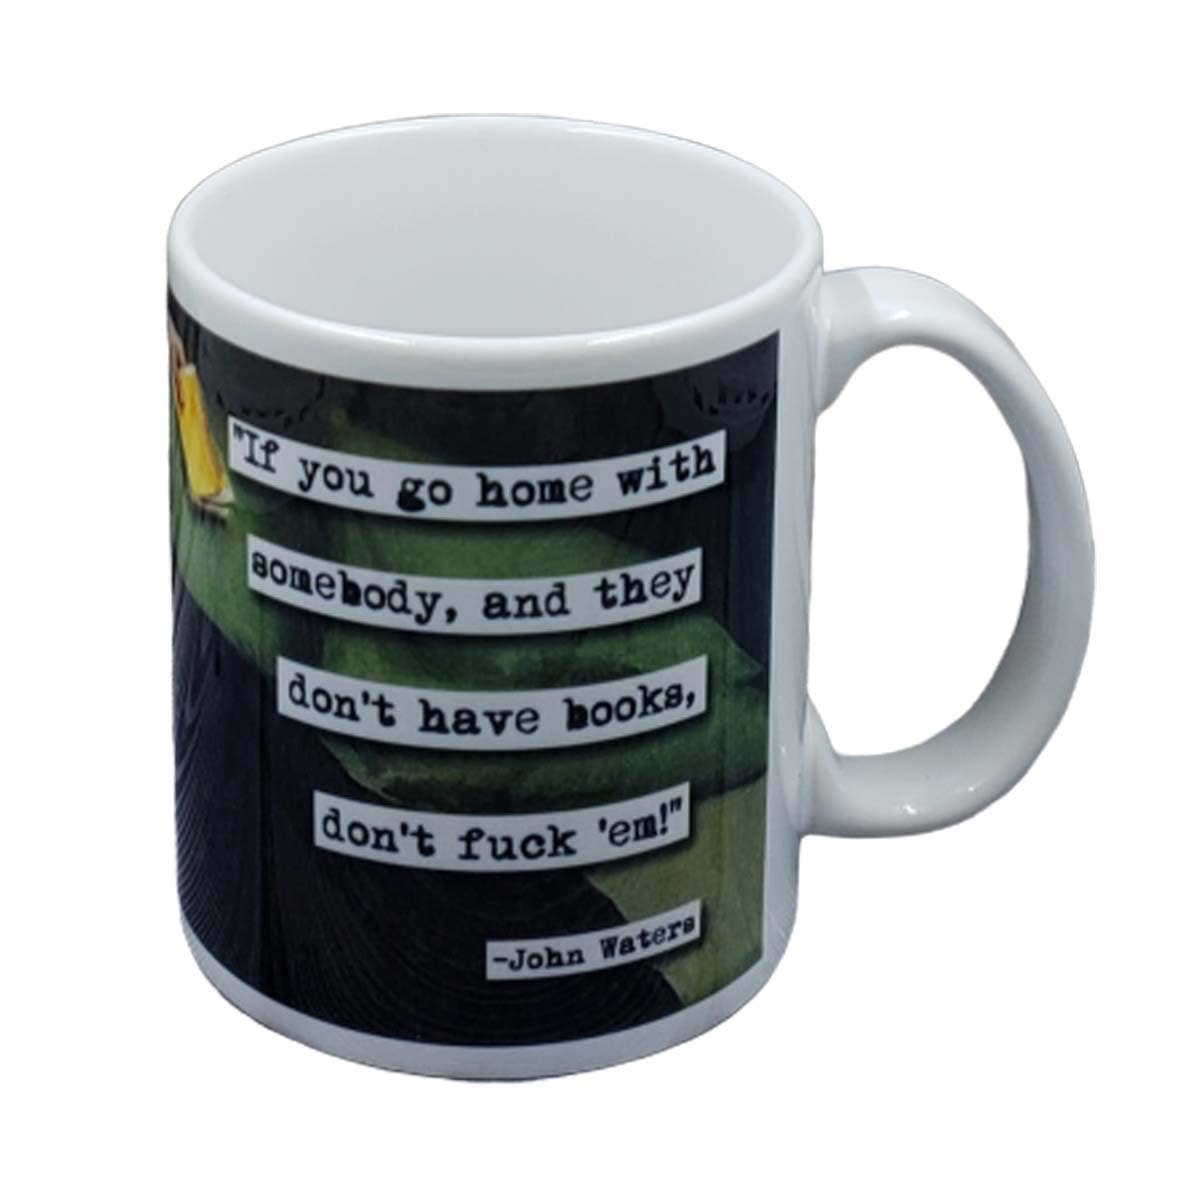 John Waters Books Quote Coffee Mug